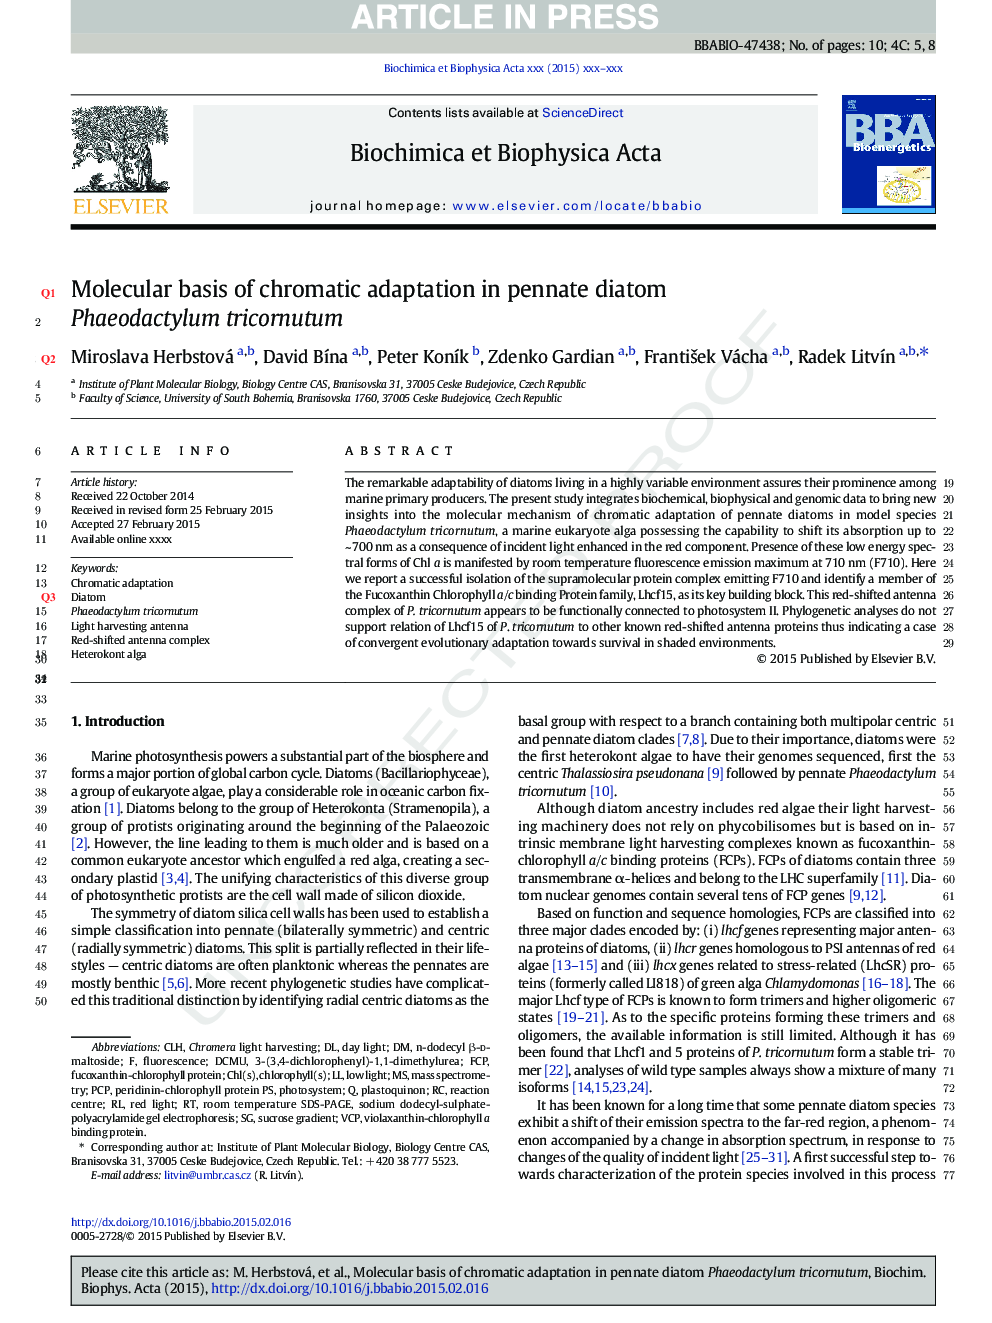 Molecular basis of chromatic adaptation in pennate diatom Phaeodactylum tricornutum